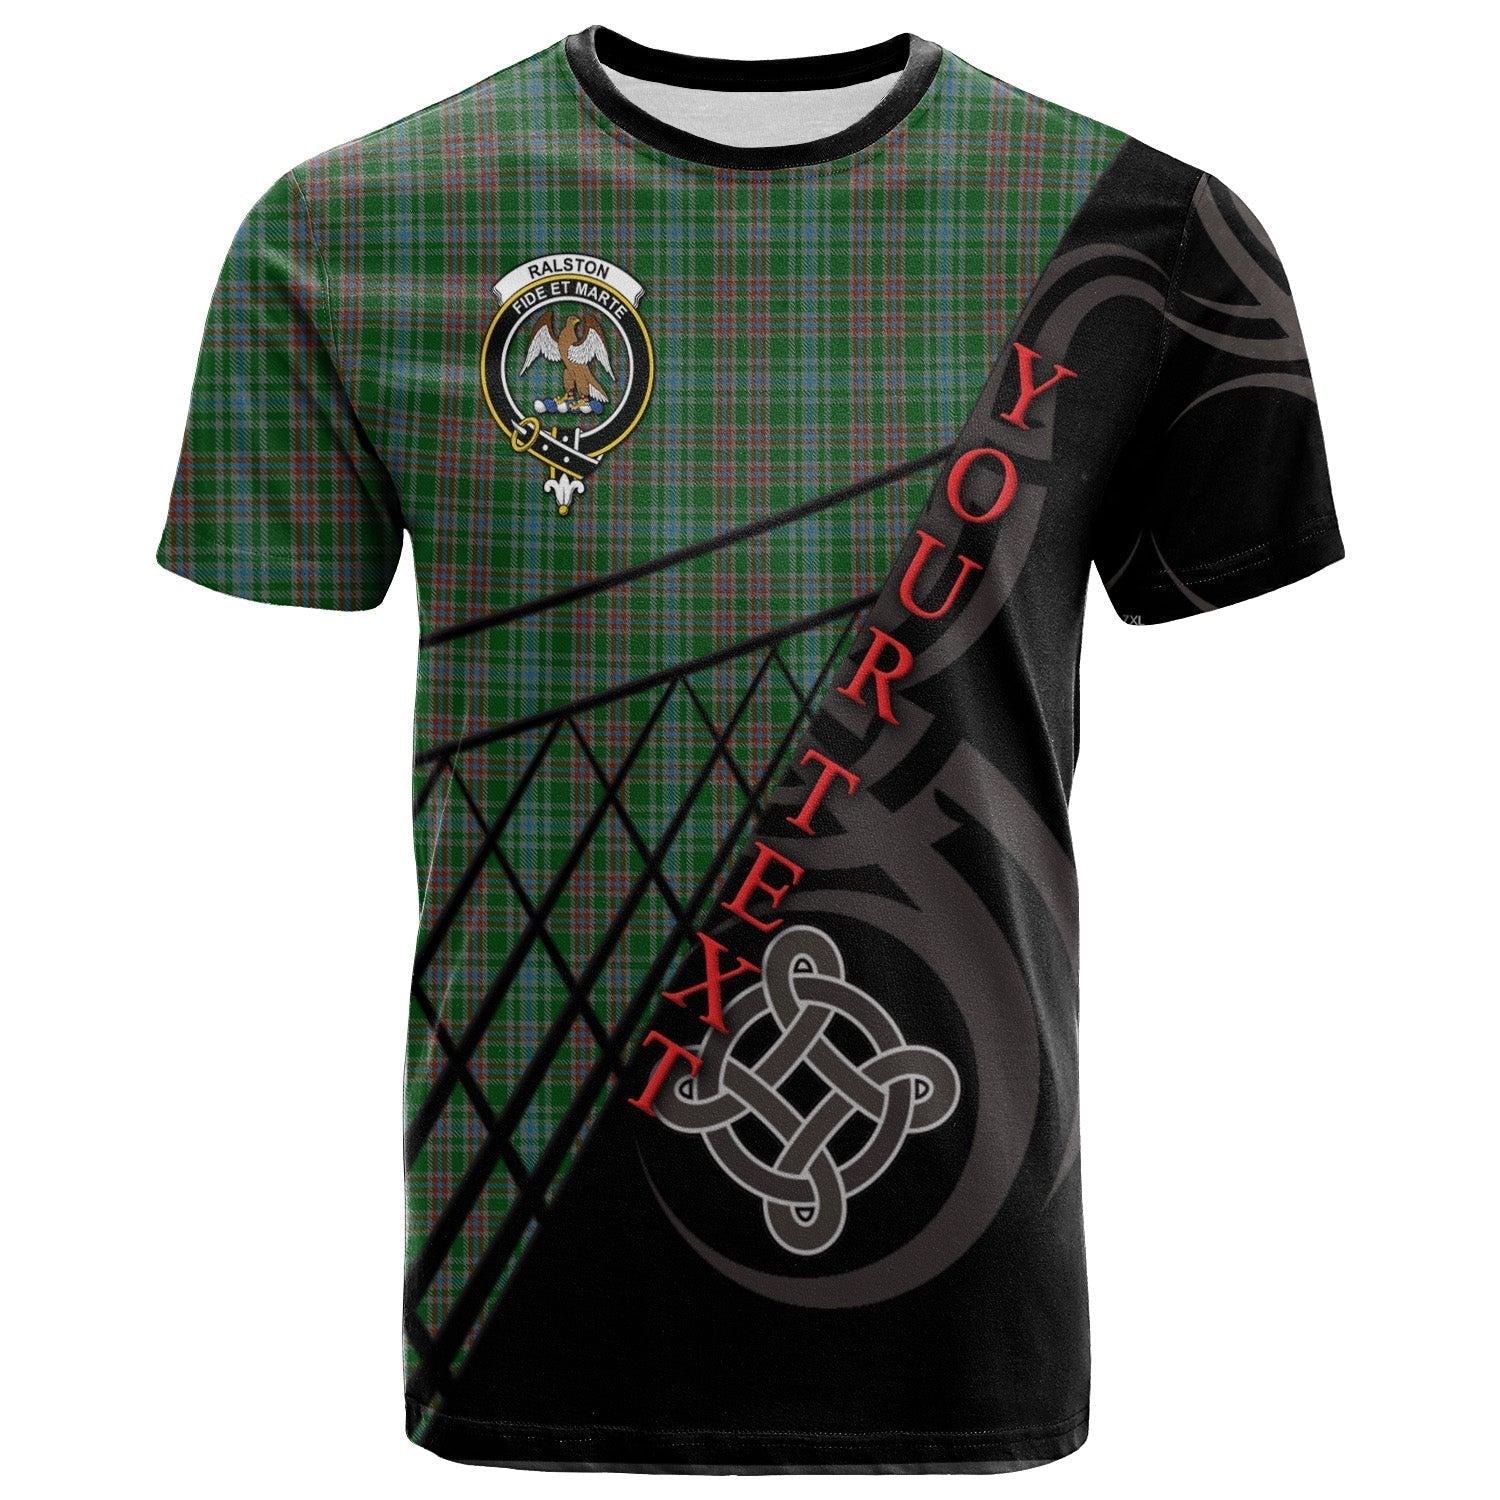 scottish-ralston-02-clan-crest-tartan-pattern-celtic-t-shirt